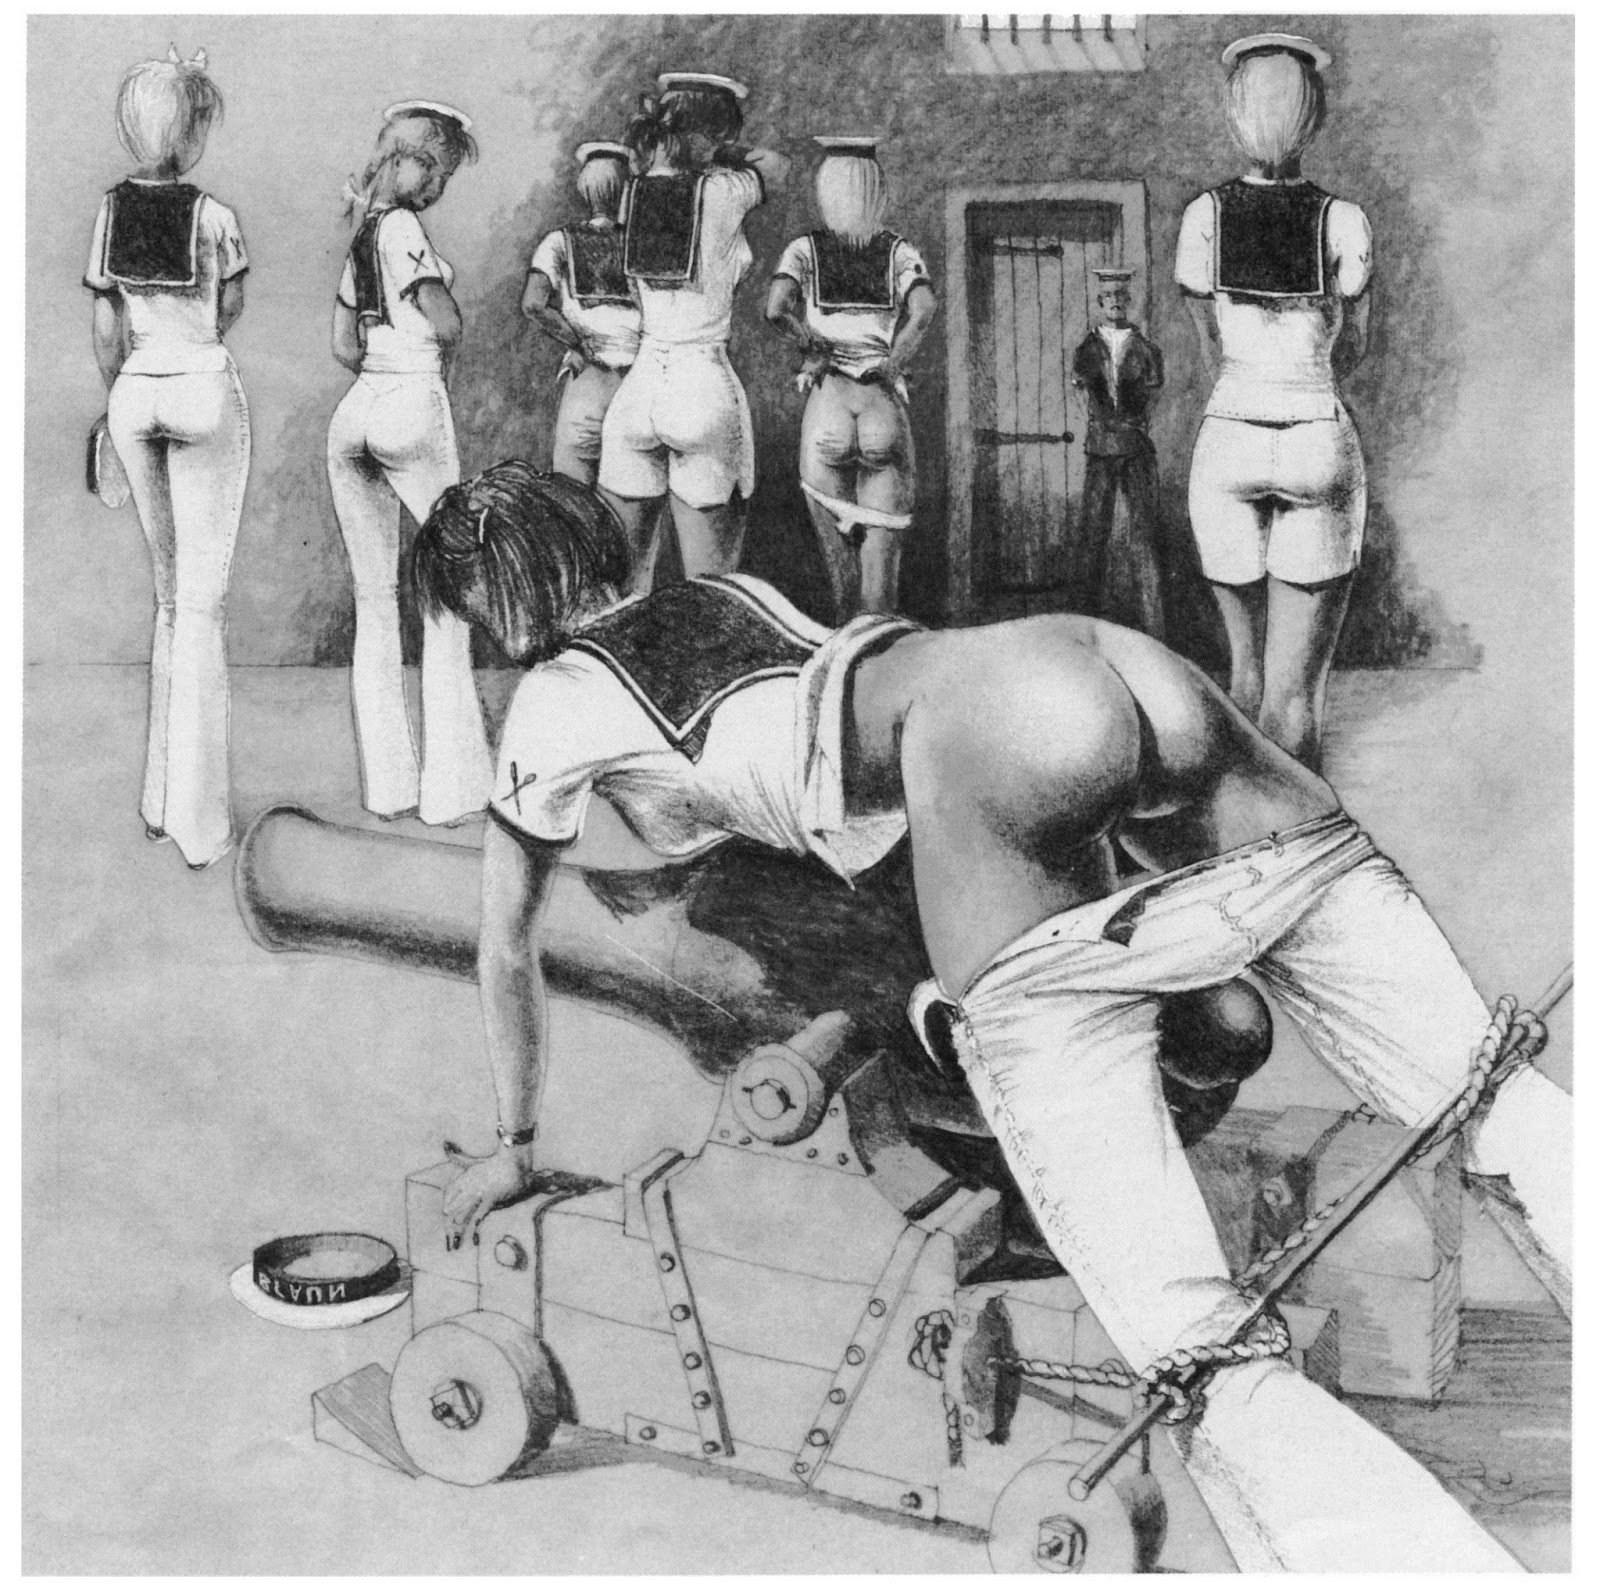 Farrel Bdsm Art Drawing - Corporal Punishment BDSM Art (65 photos) - motherless porn pics